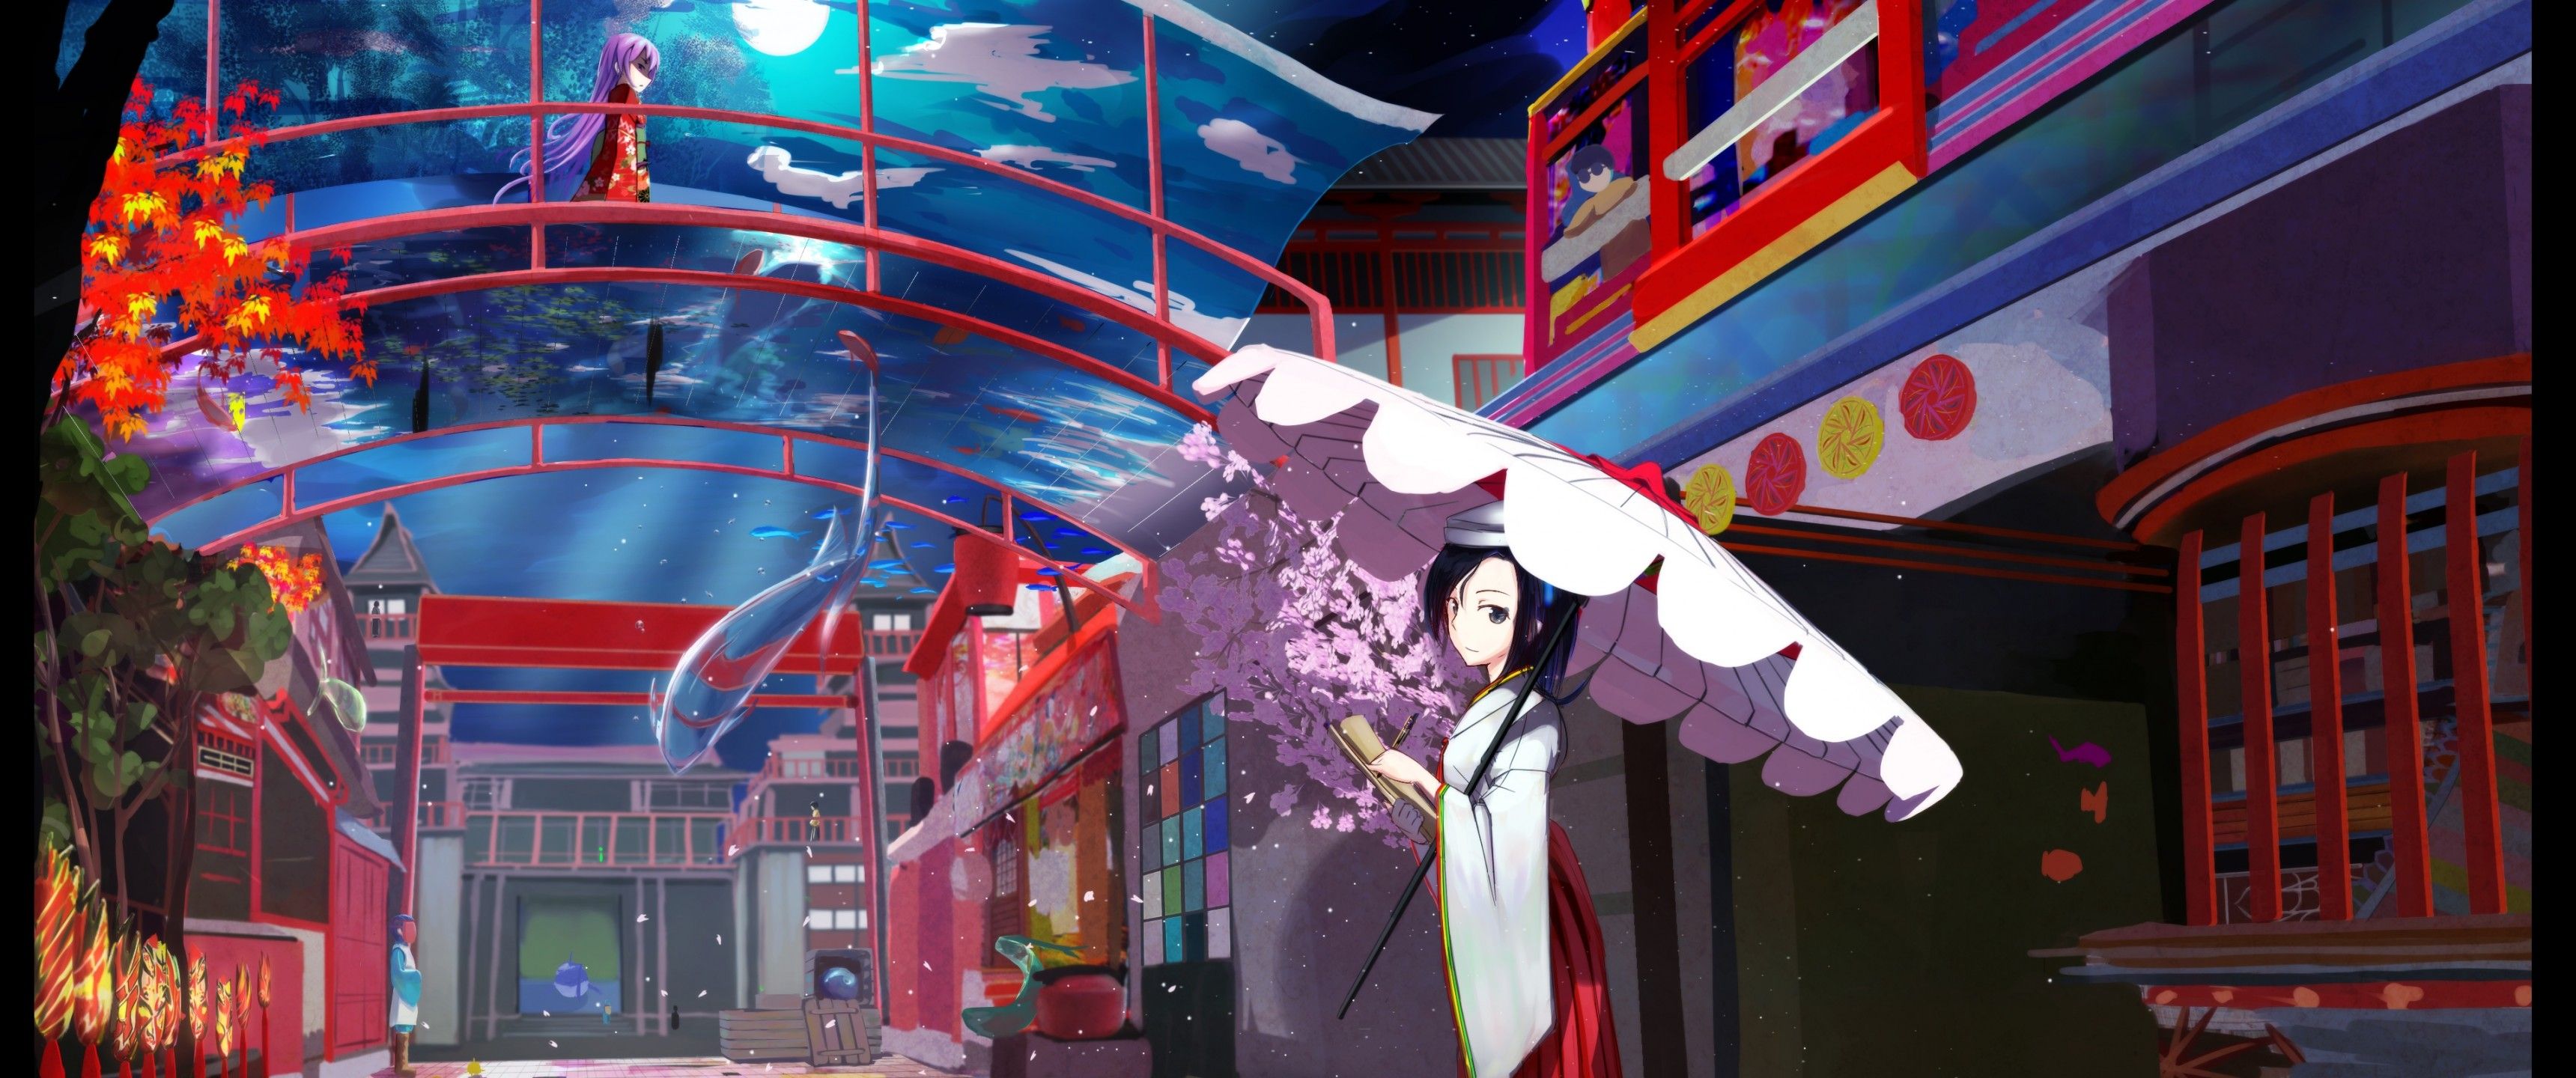 Wallpaper car supercar japan anime art street cyberpunk kanji  japanse images for desktop section арт  download